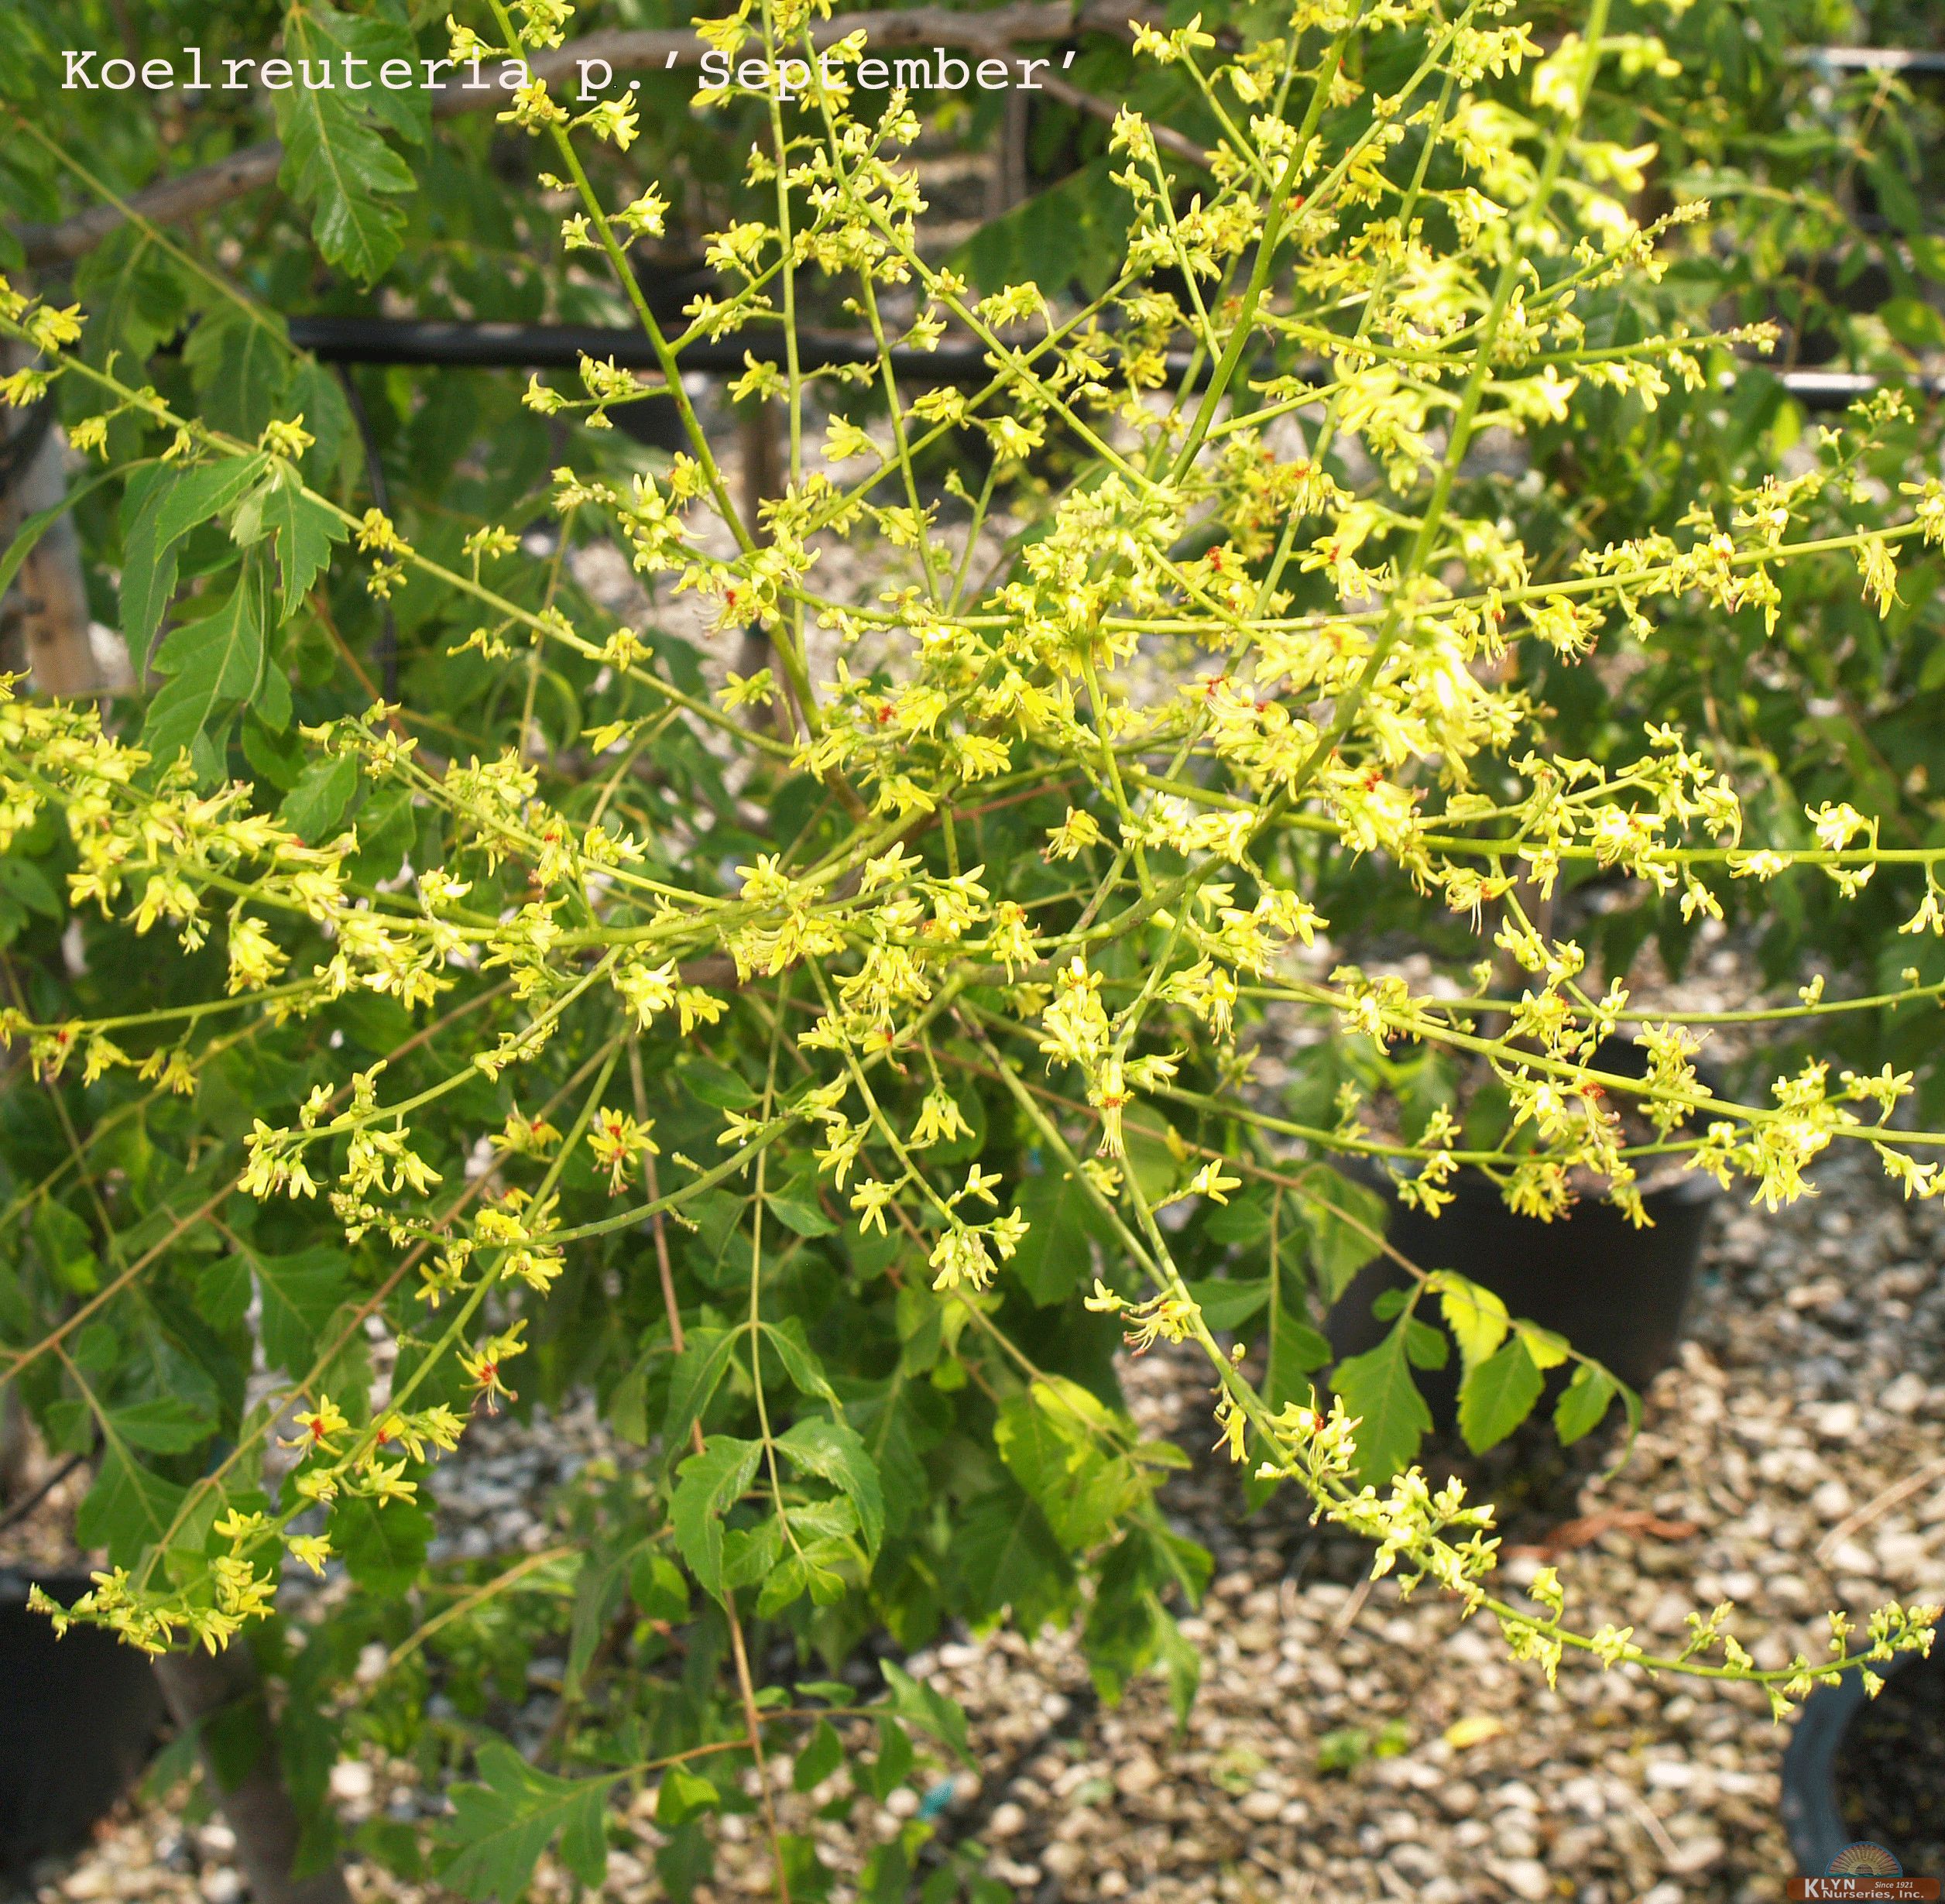 Koereuteria paniculata 'September'-September Golden Rain Tree